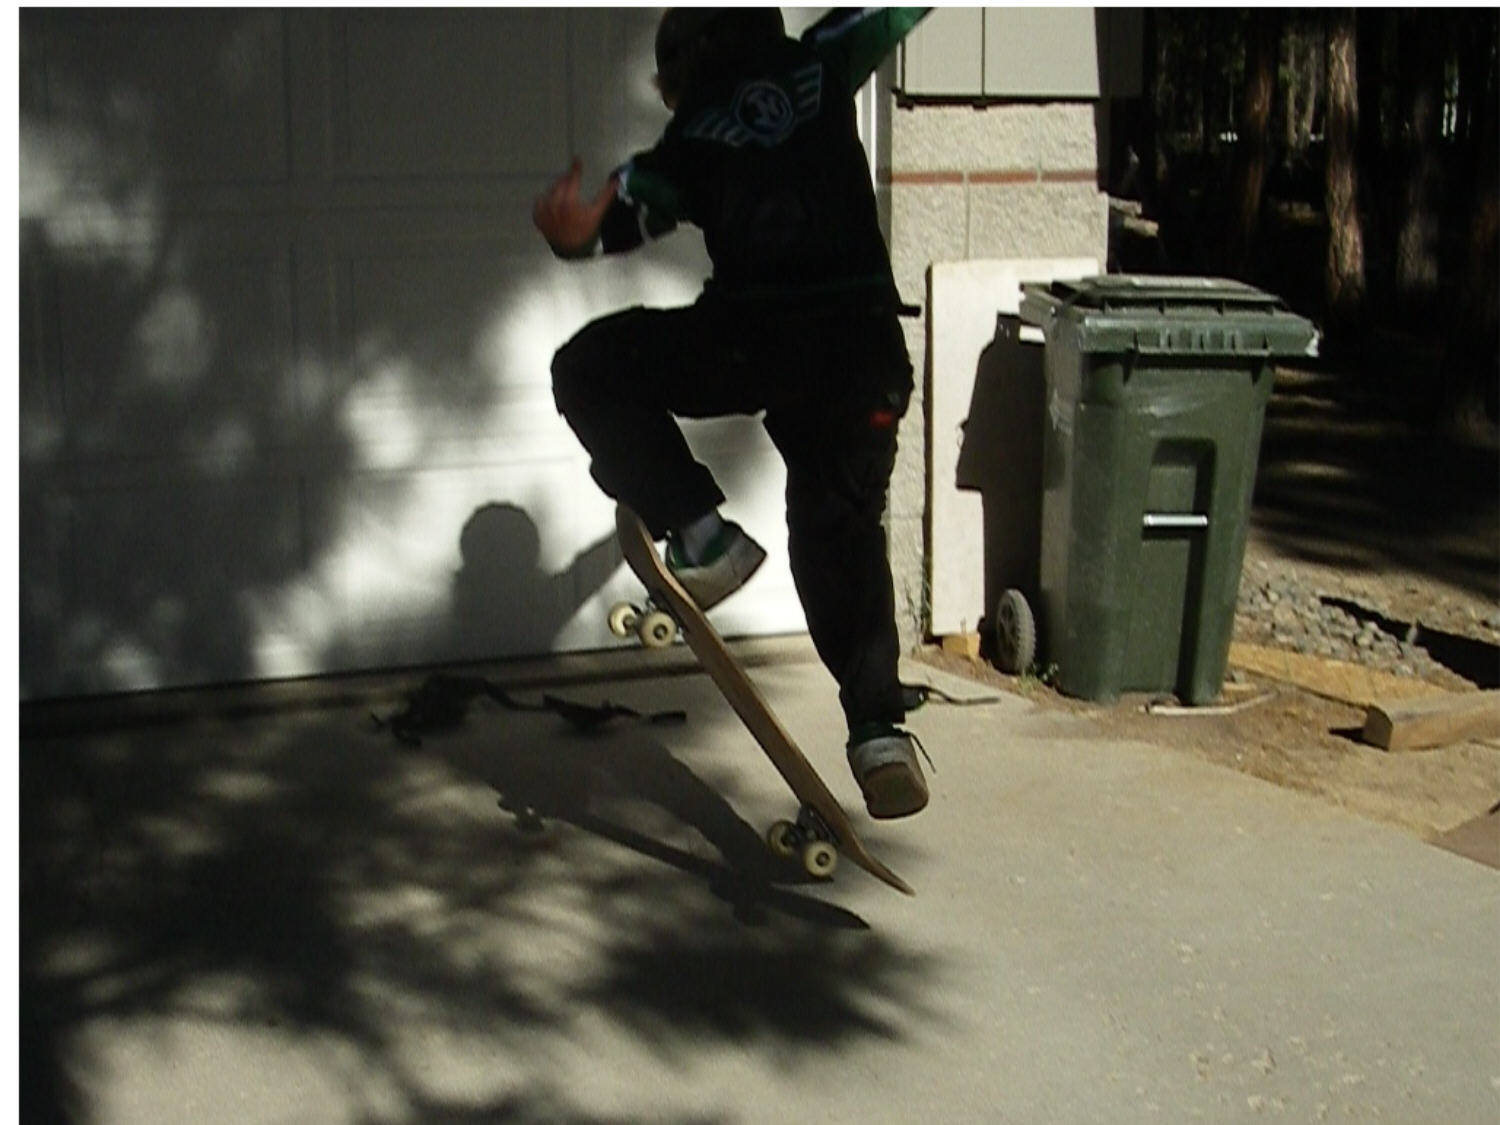 How to ollie on a skateboard